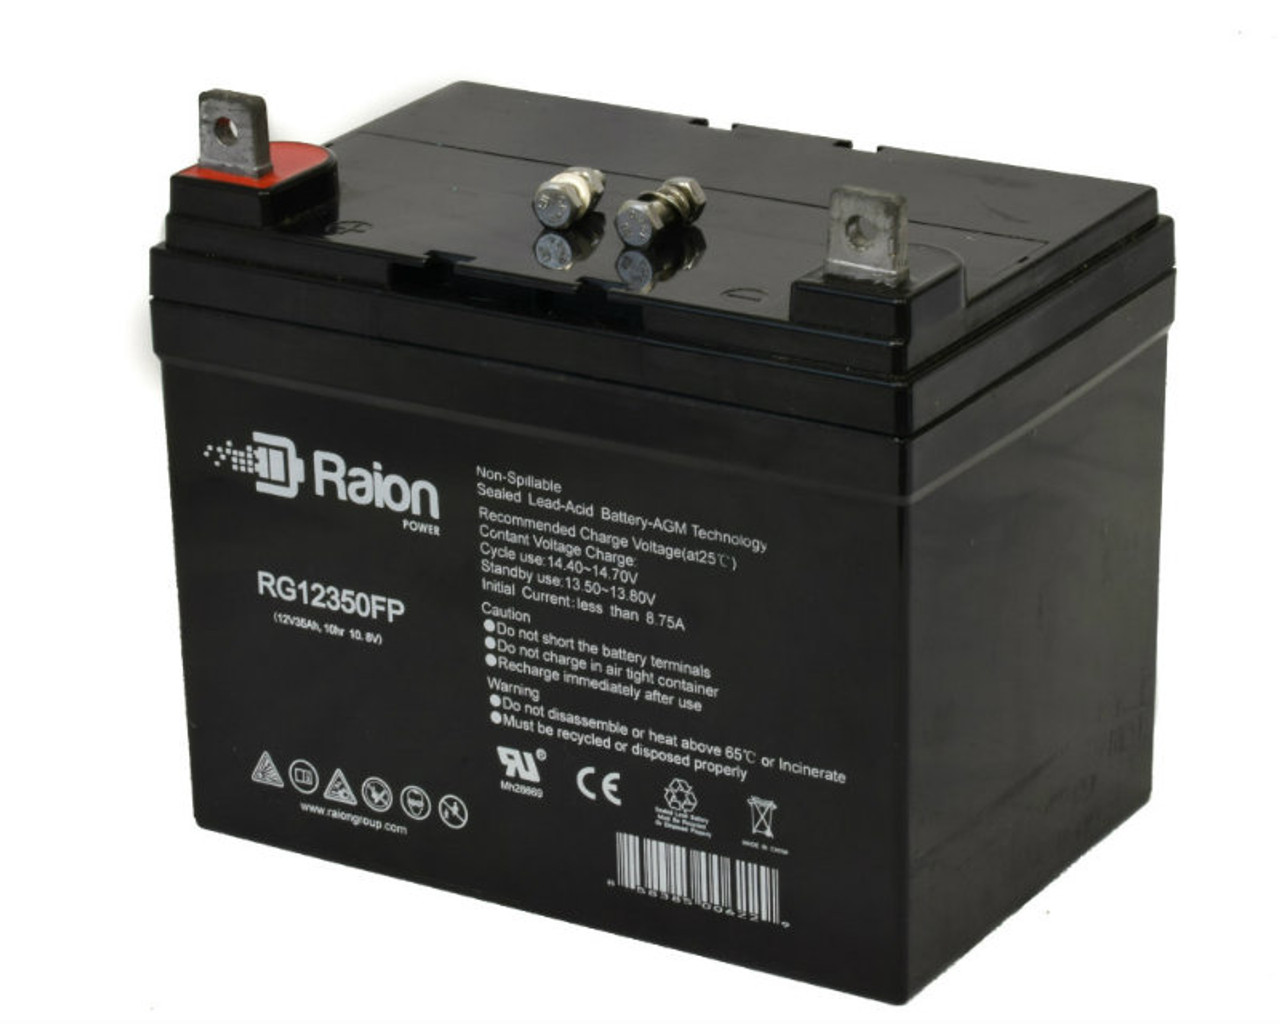 Raion Power Replacement 12V 35Ah RG12350FP Battery for Husqvarna LTH130